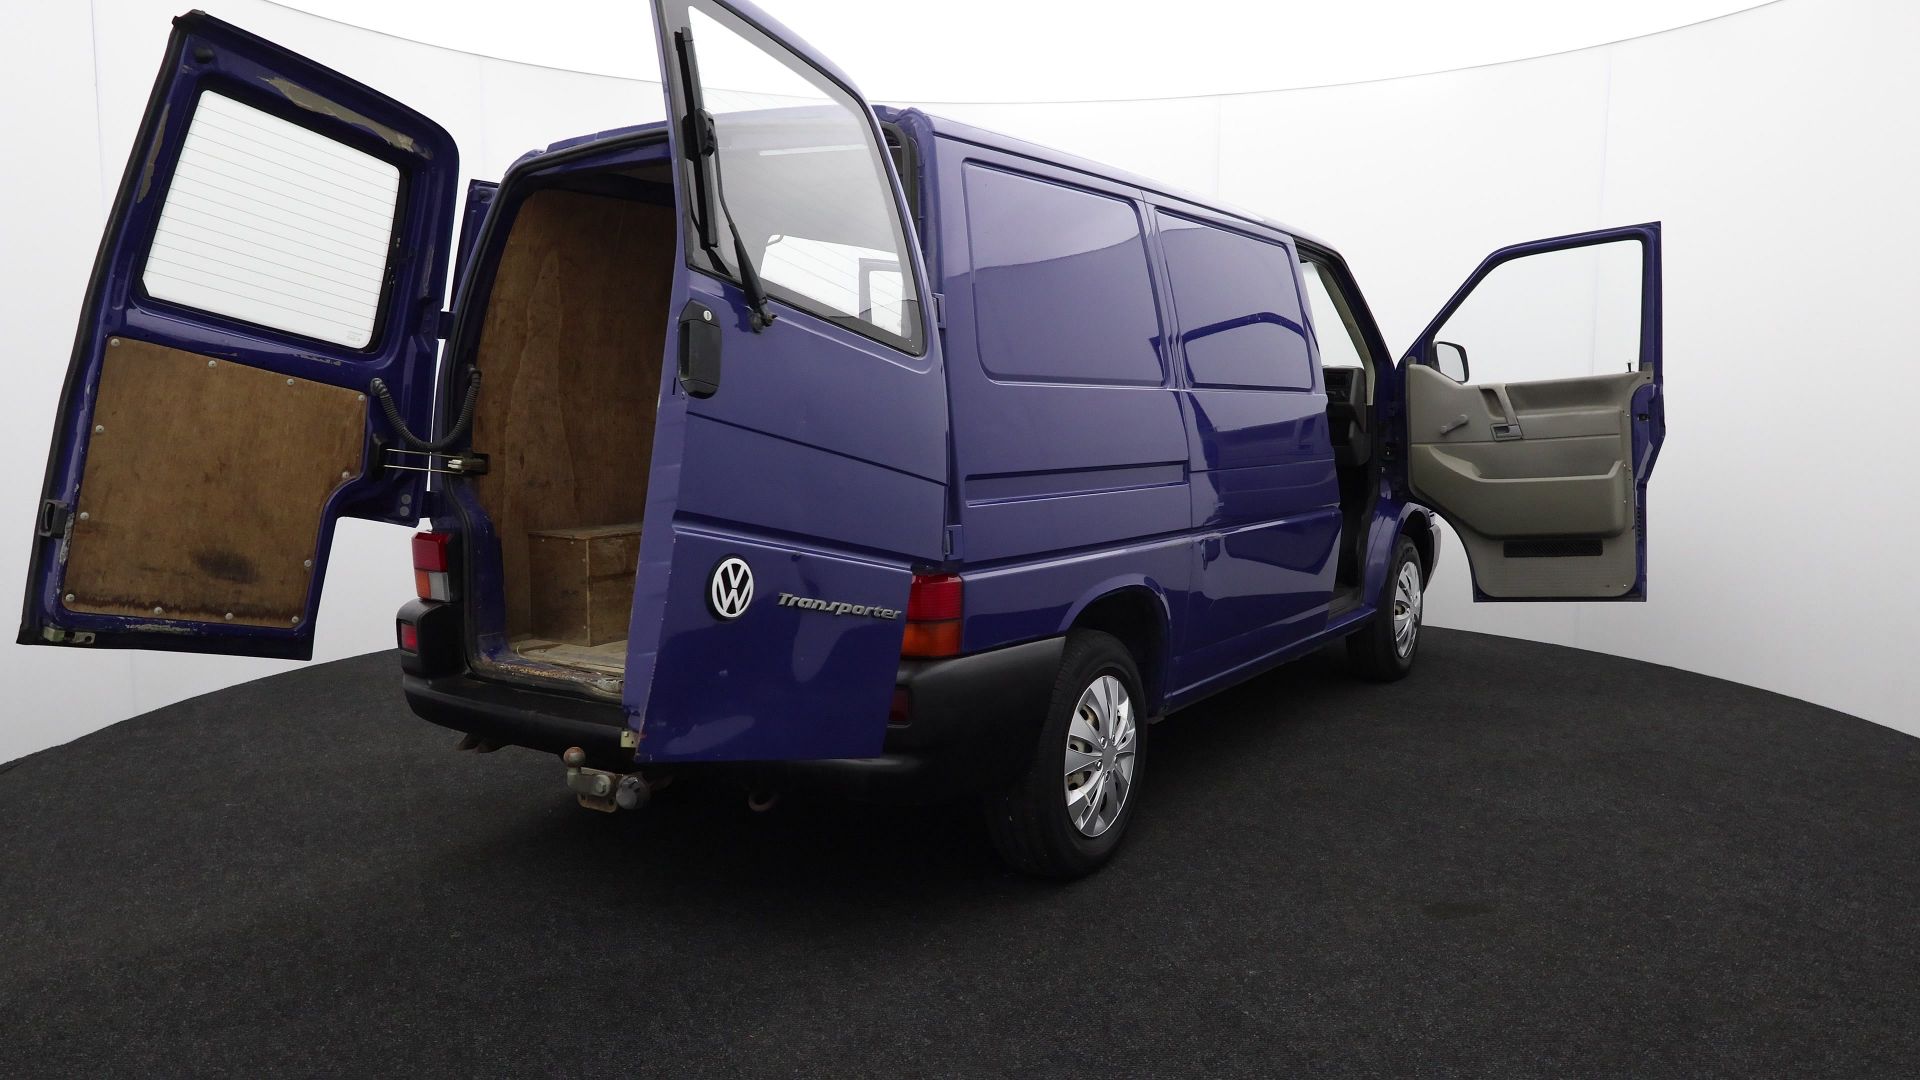 Volkswagen 1000TD Transporter van - 1.9L diesel - 53439 miles - SWB - blue - Image 55 of 68